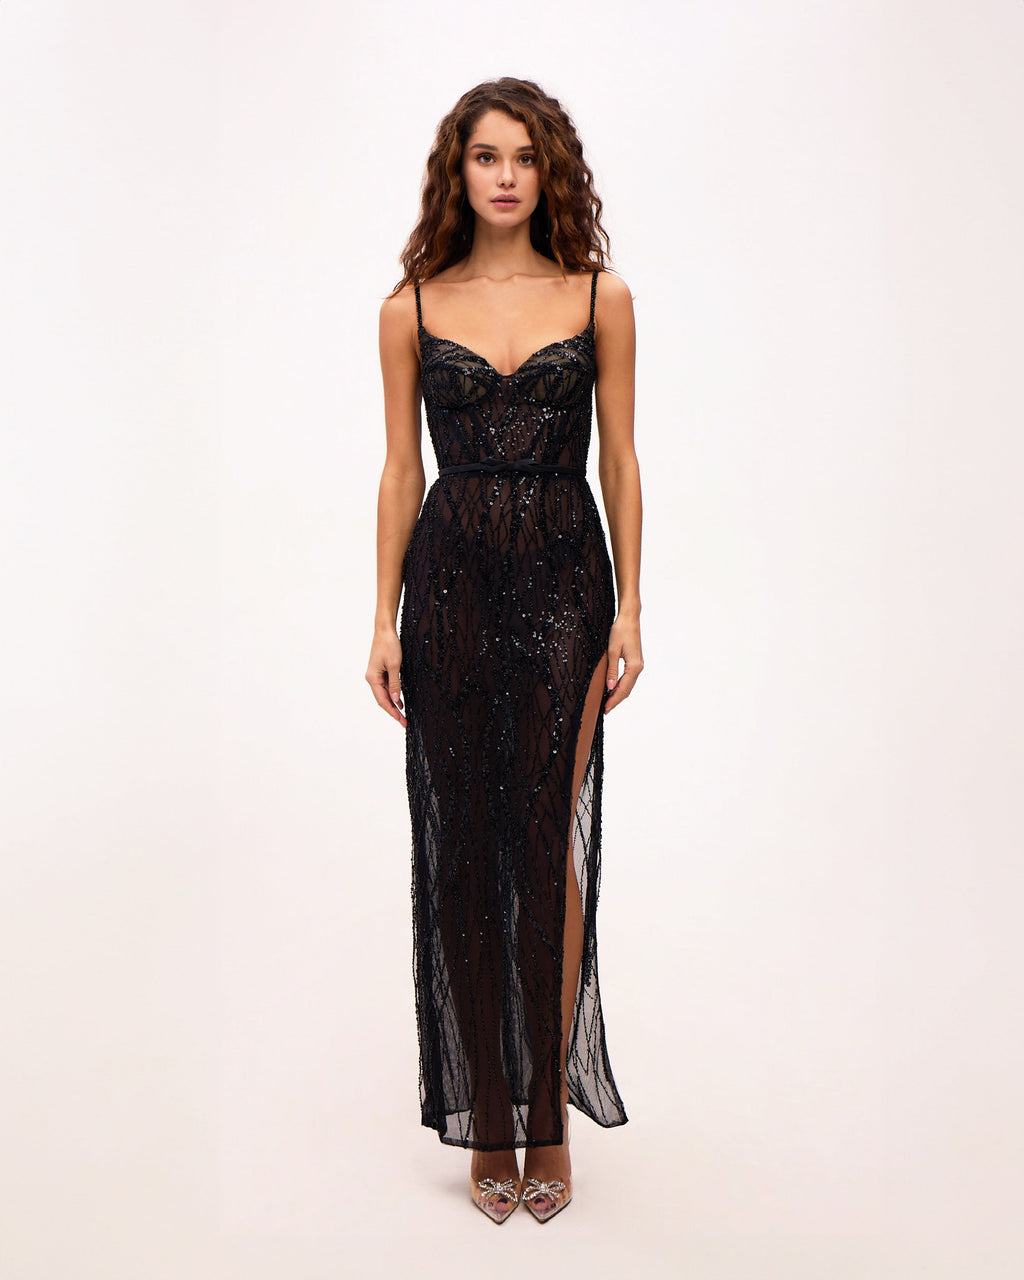 V-Neck Front High Split Simple Evening Dresses Backless Mermaid Spaghetti  Strap Black Prom Party Gown robe de soirée femme